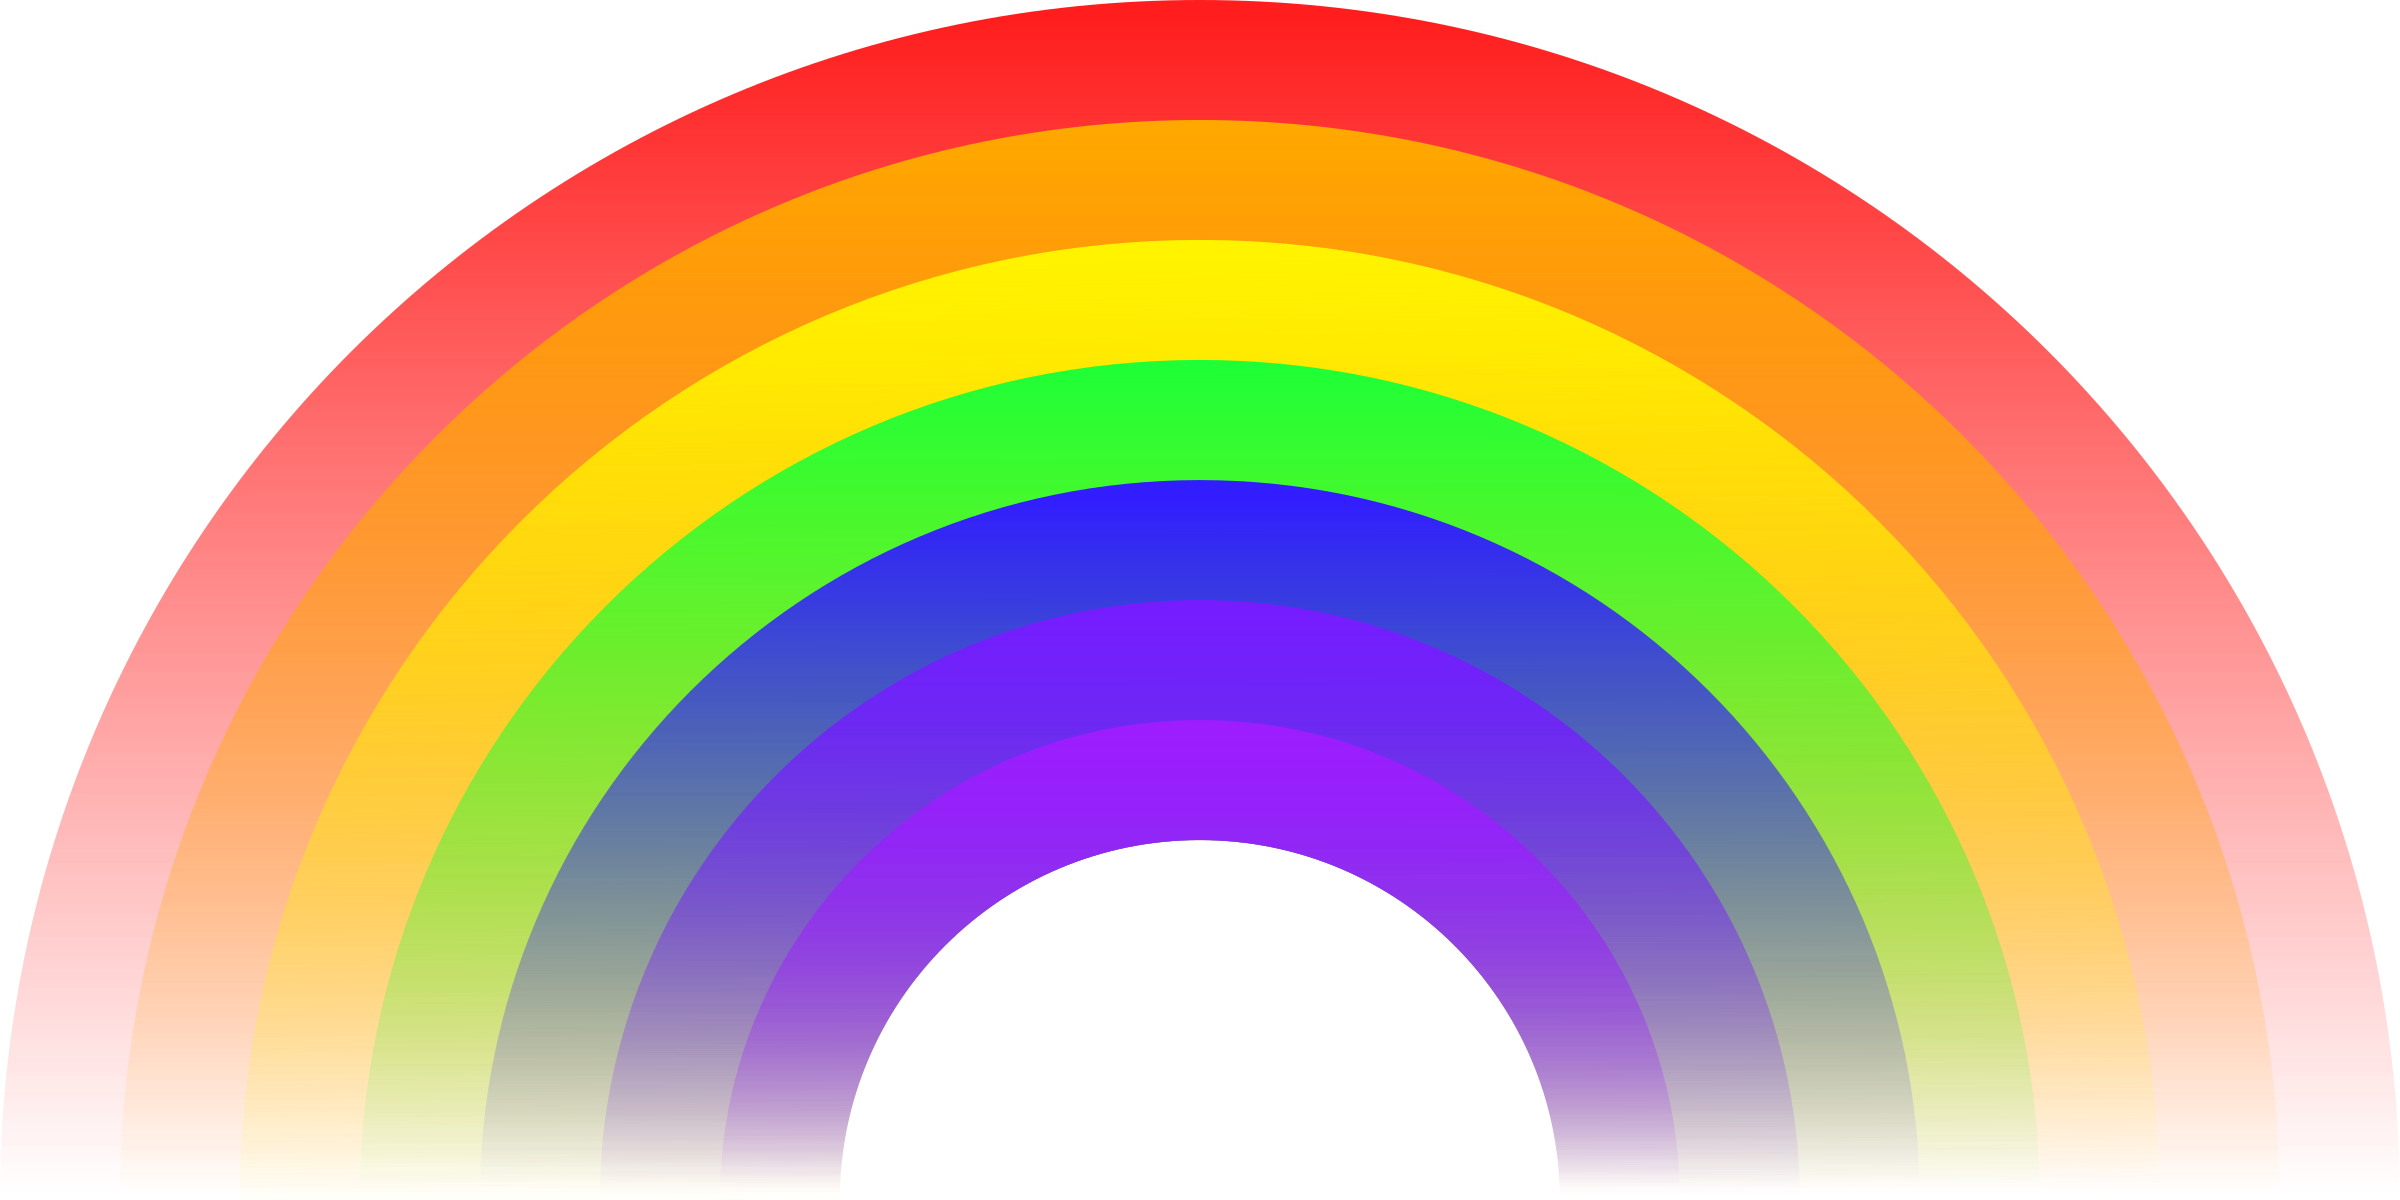 Rainbow Vector Clipart image - Free stock photo - Public Domain photo